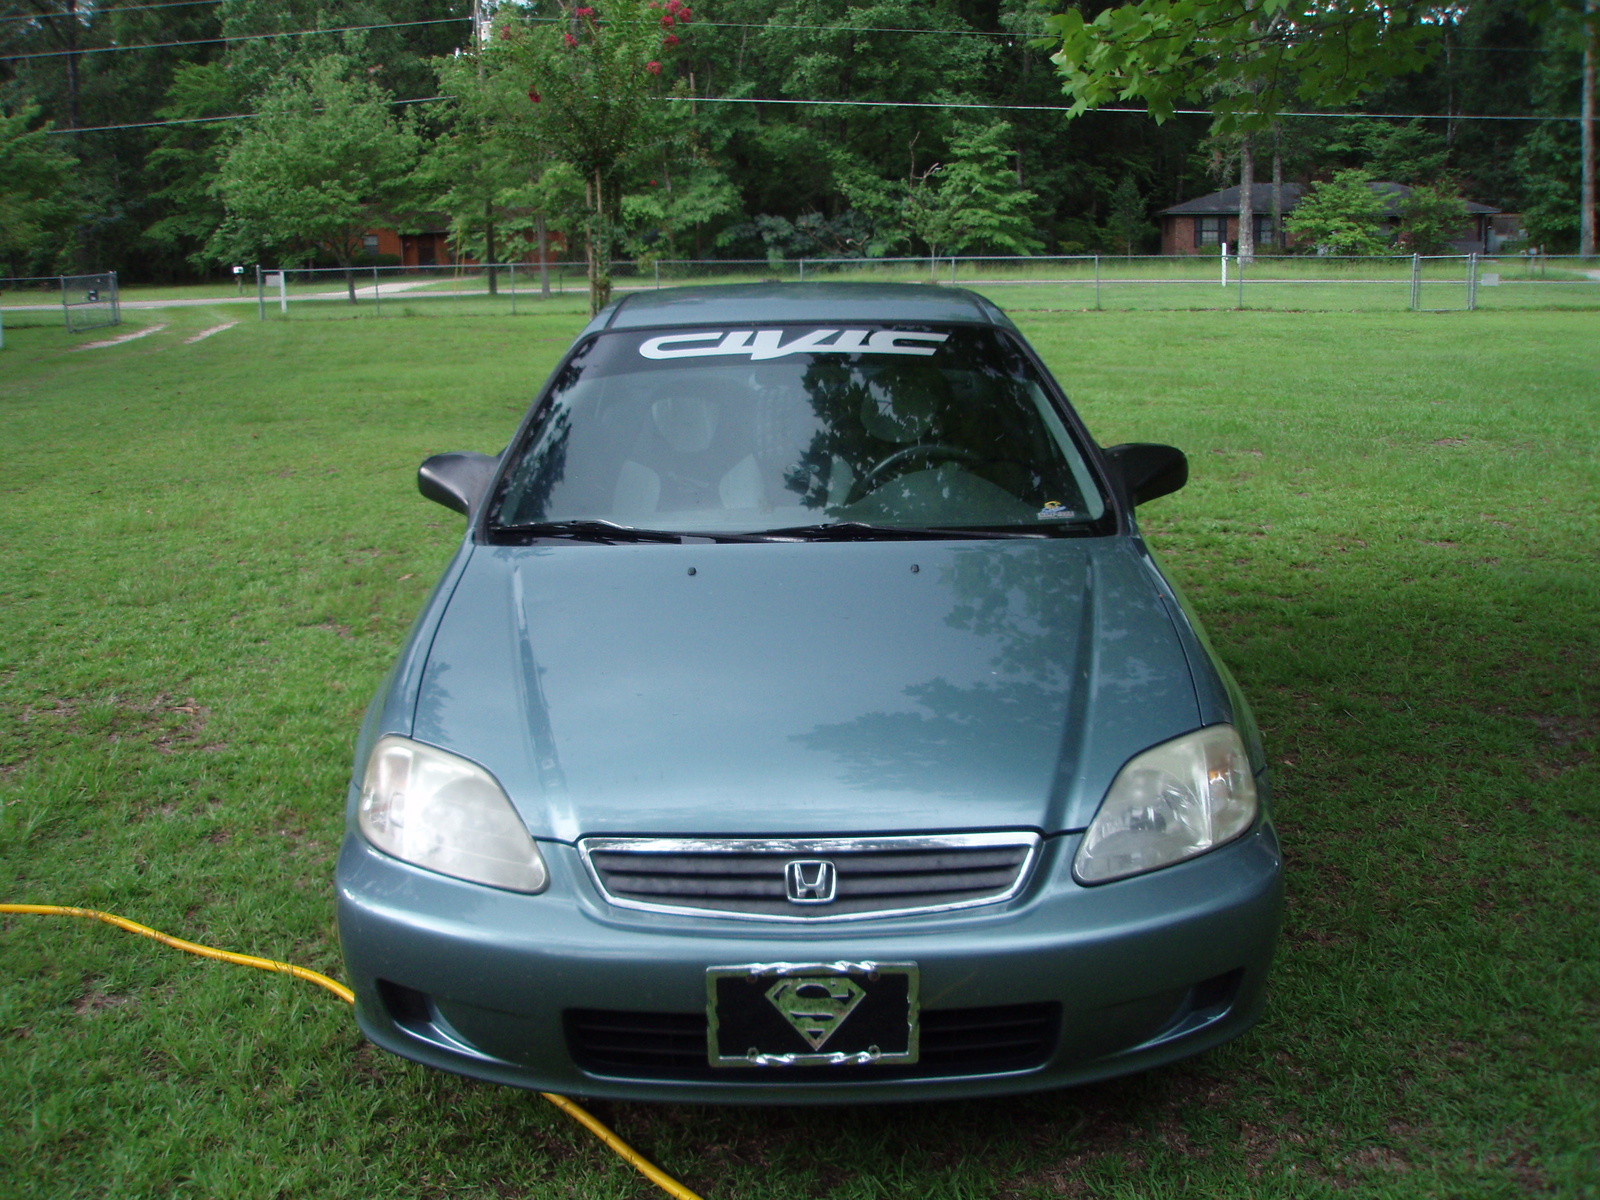 1999 Honda civic lx sedan review #3